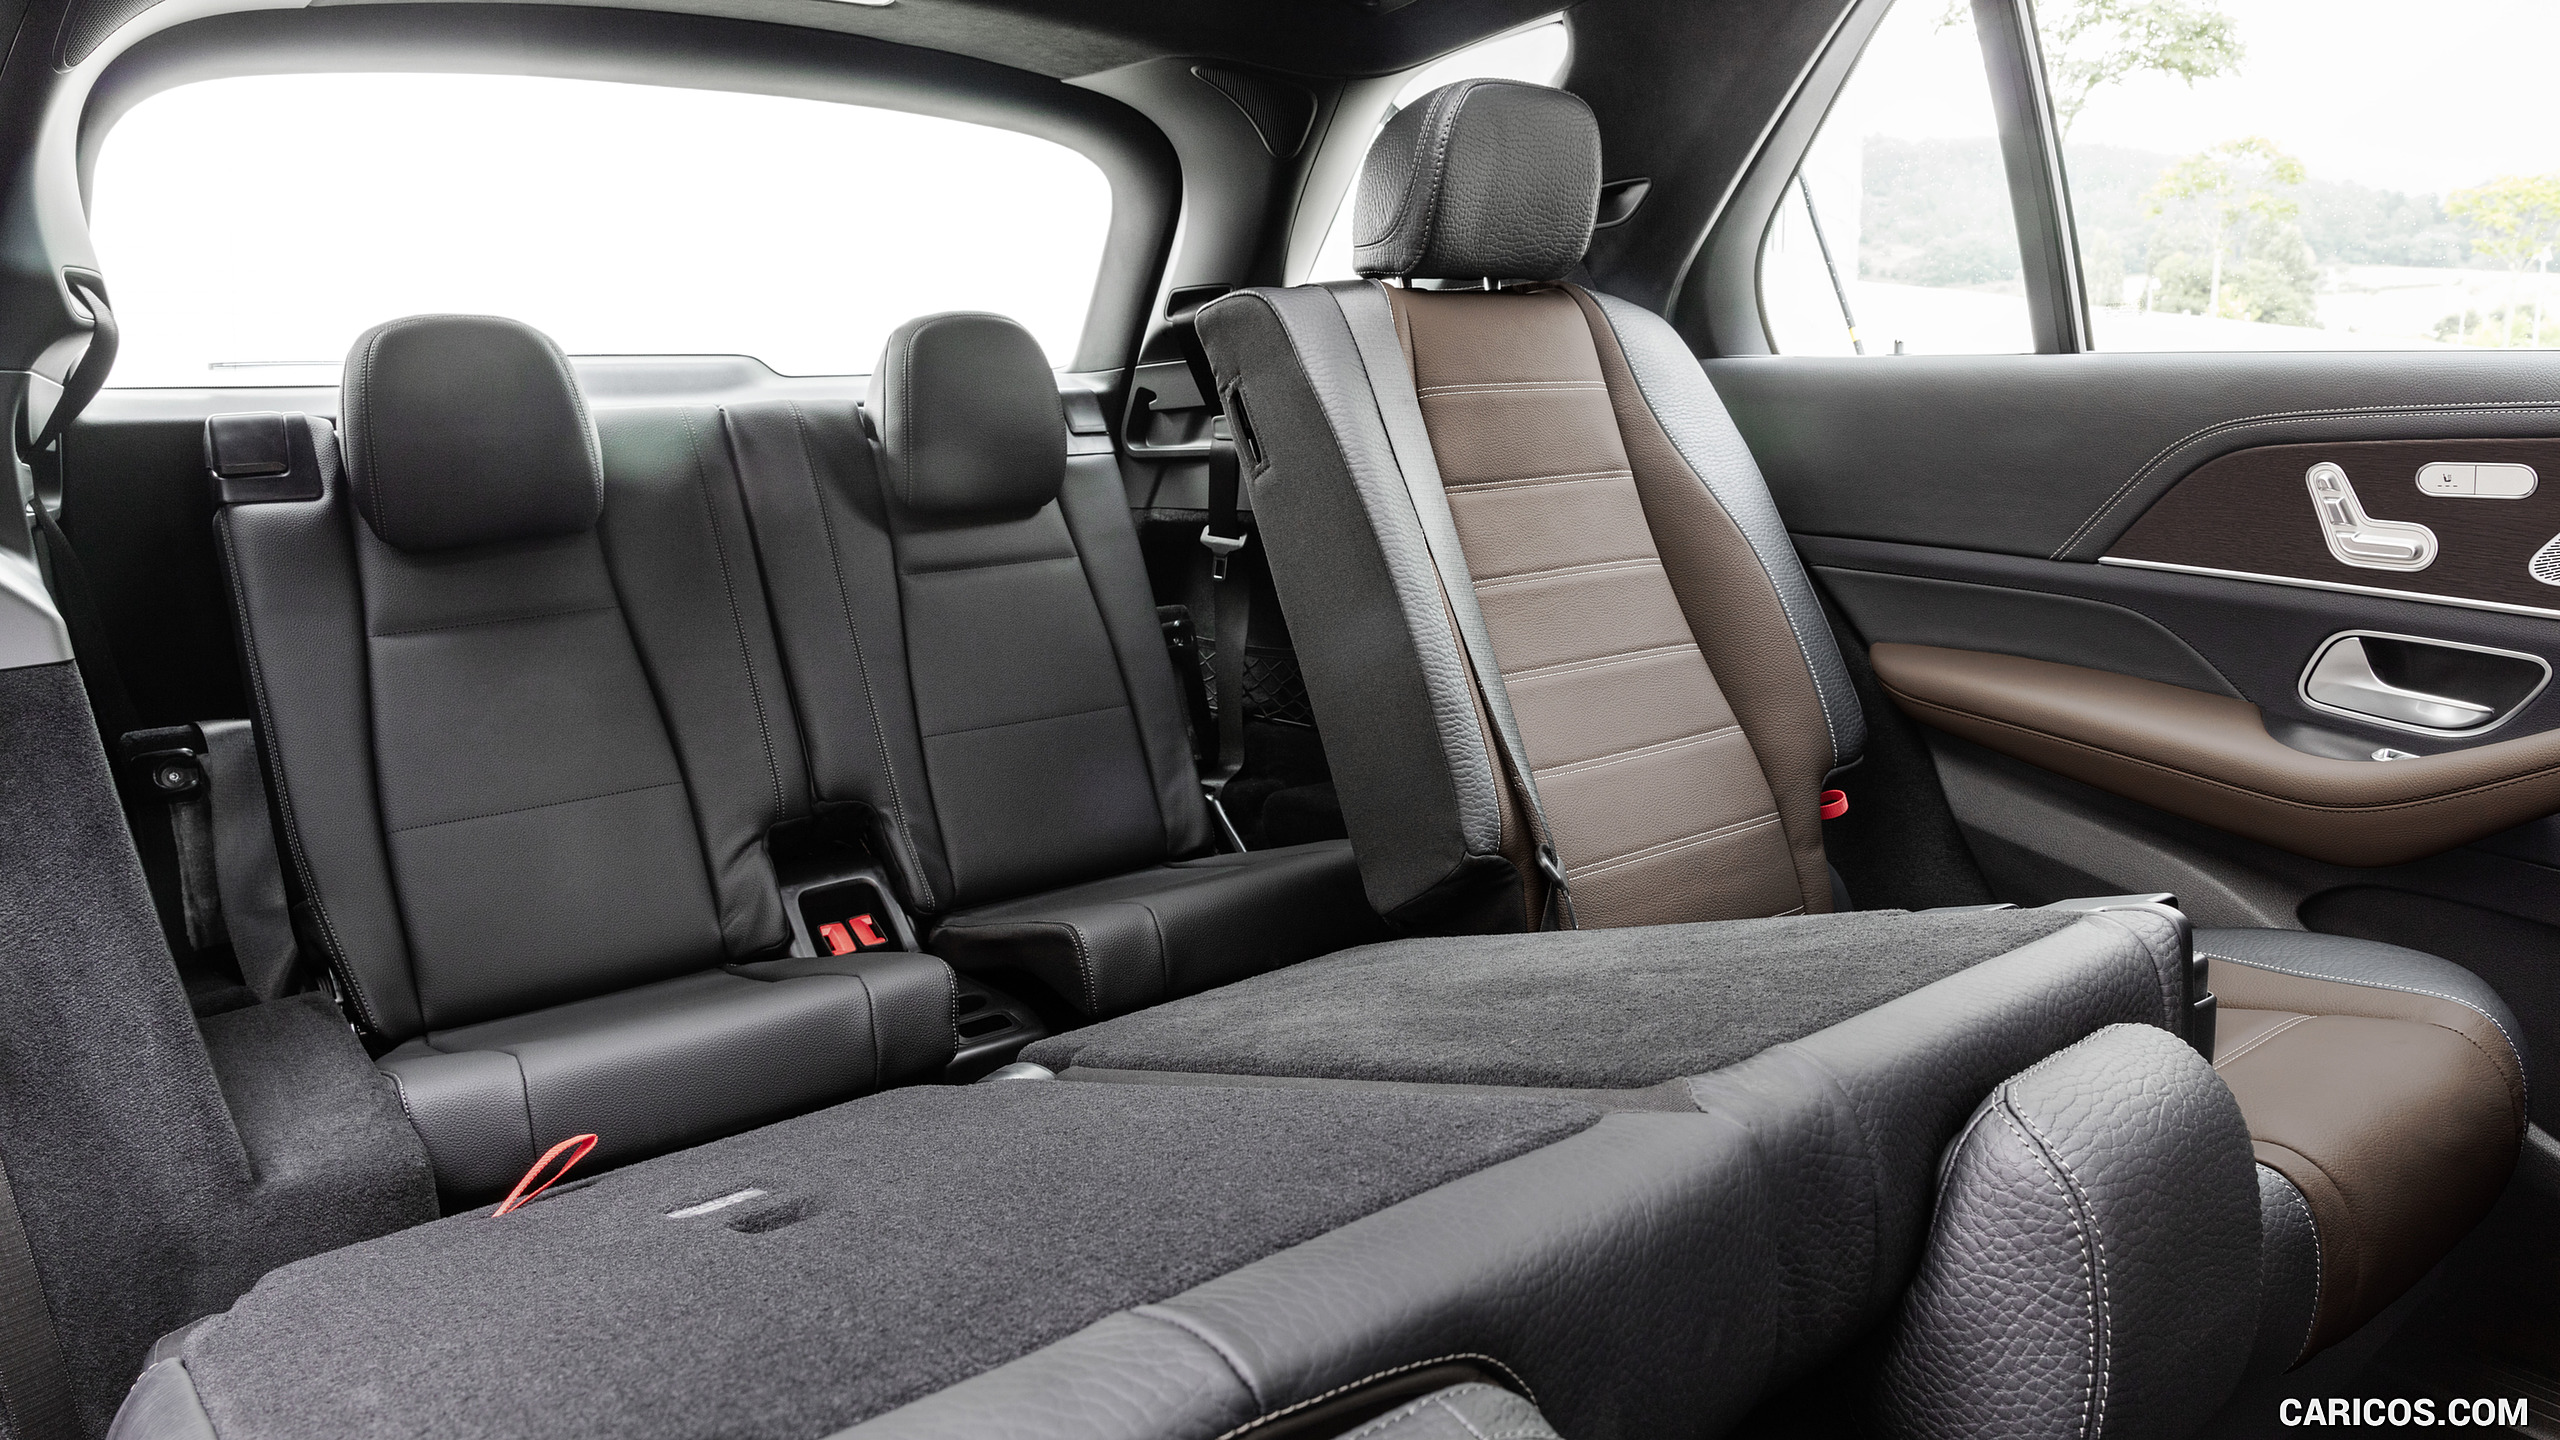 2020 Mercedes-Benz GLE - Interior, Third Row Seats, #25 of 358